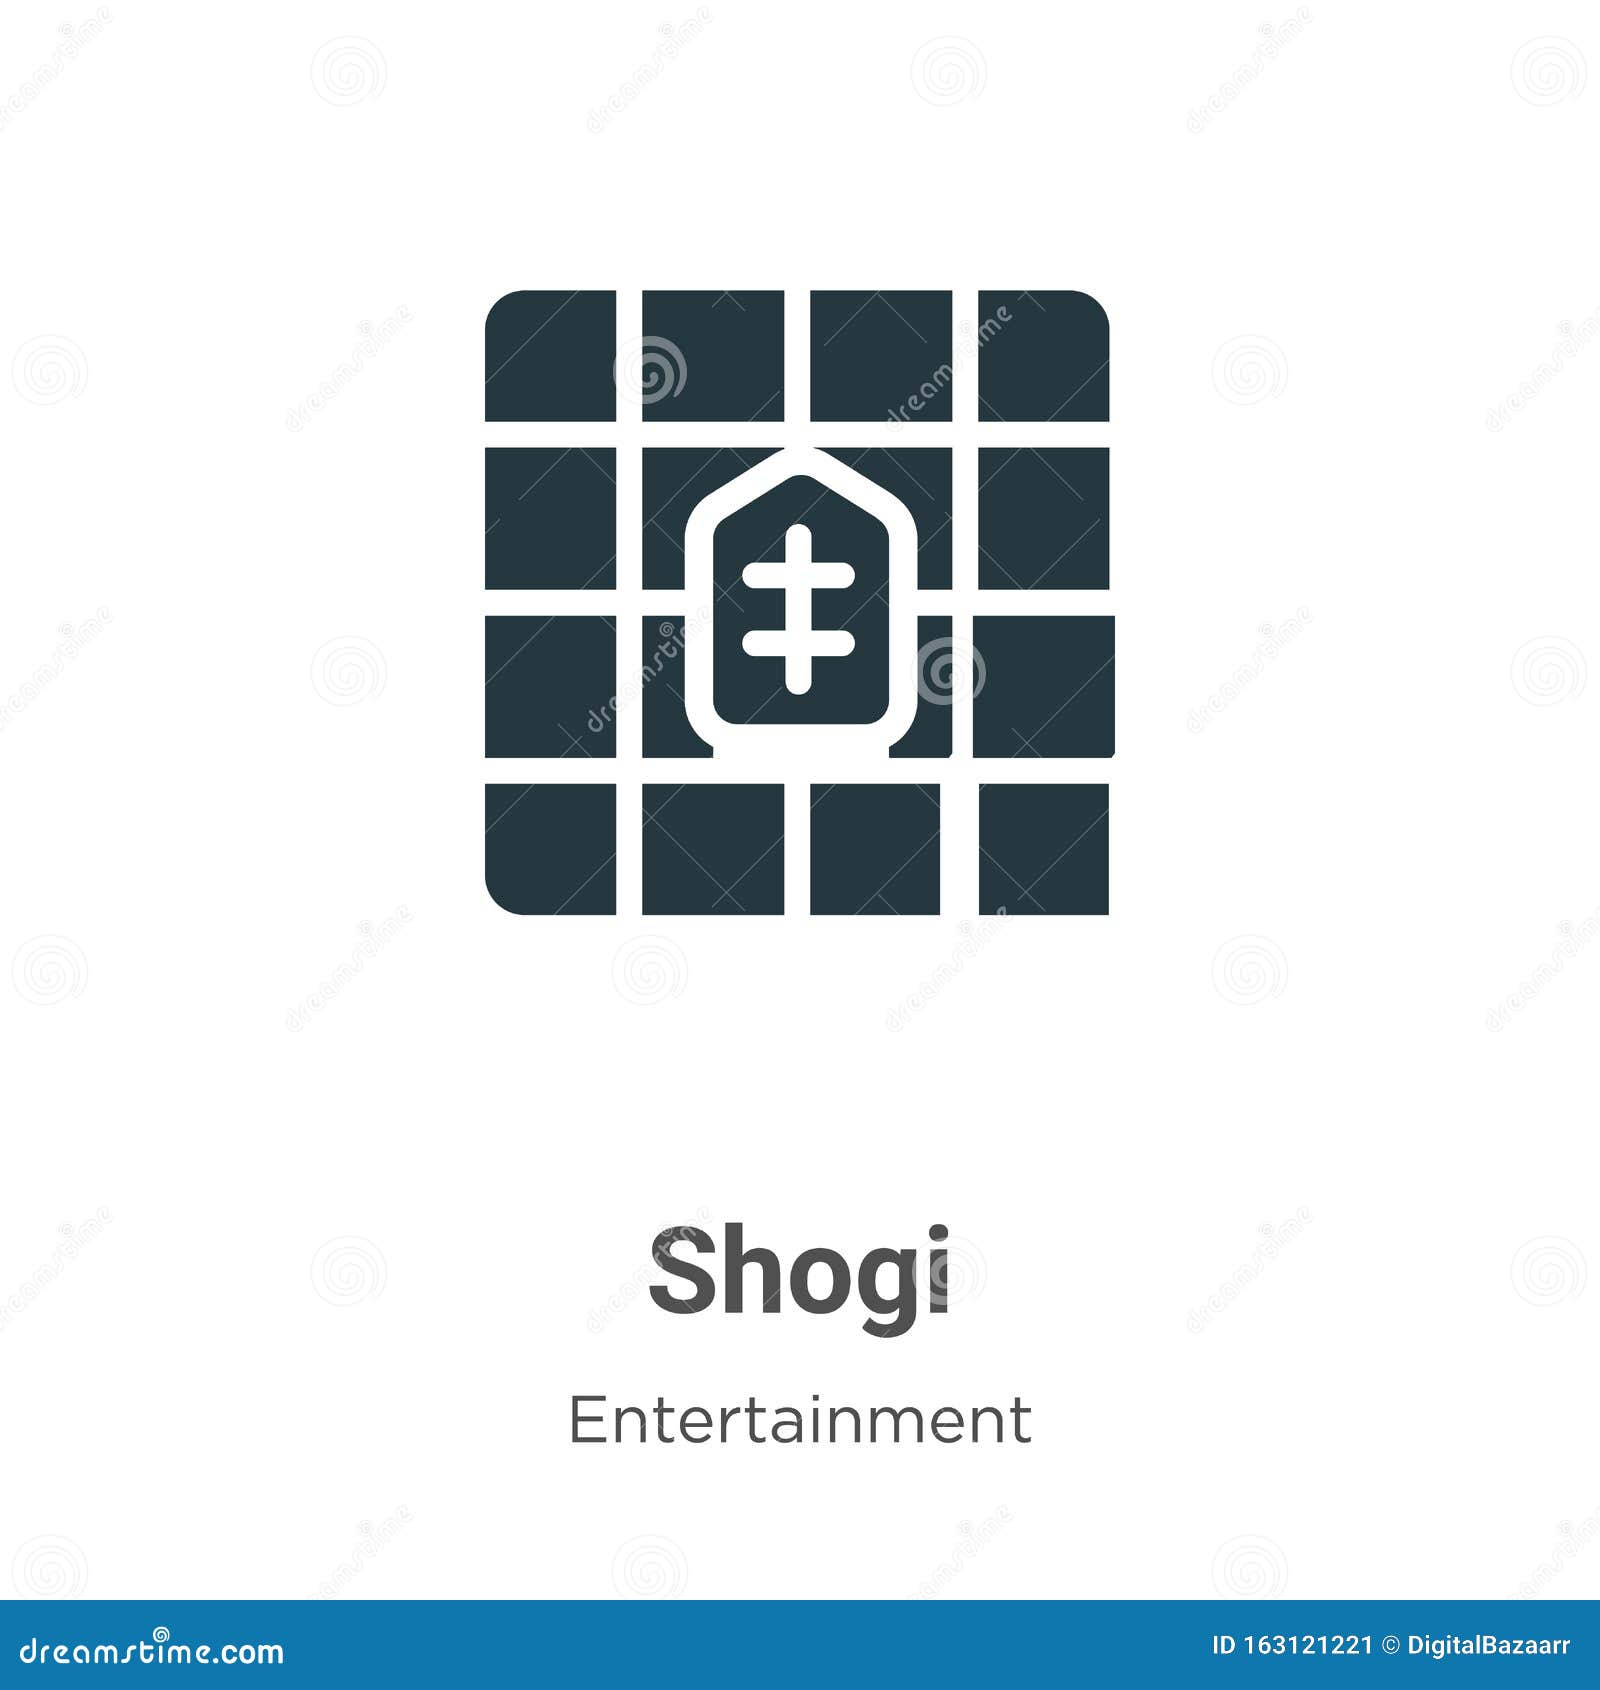 Shogi Projects  Photos, videos, logos, illustrations and branding